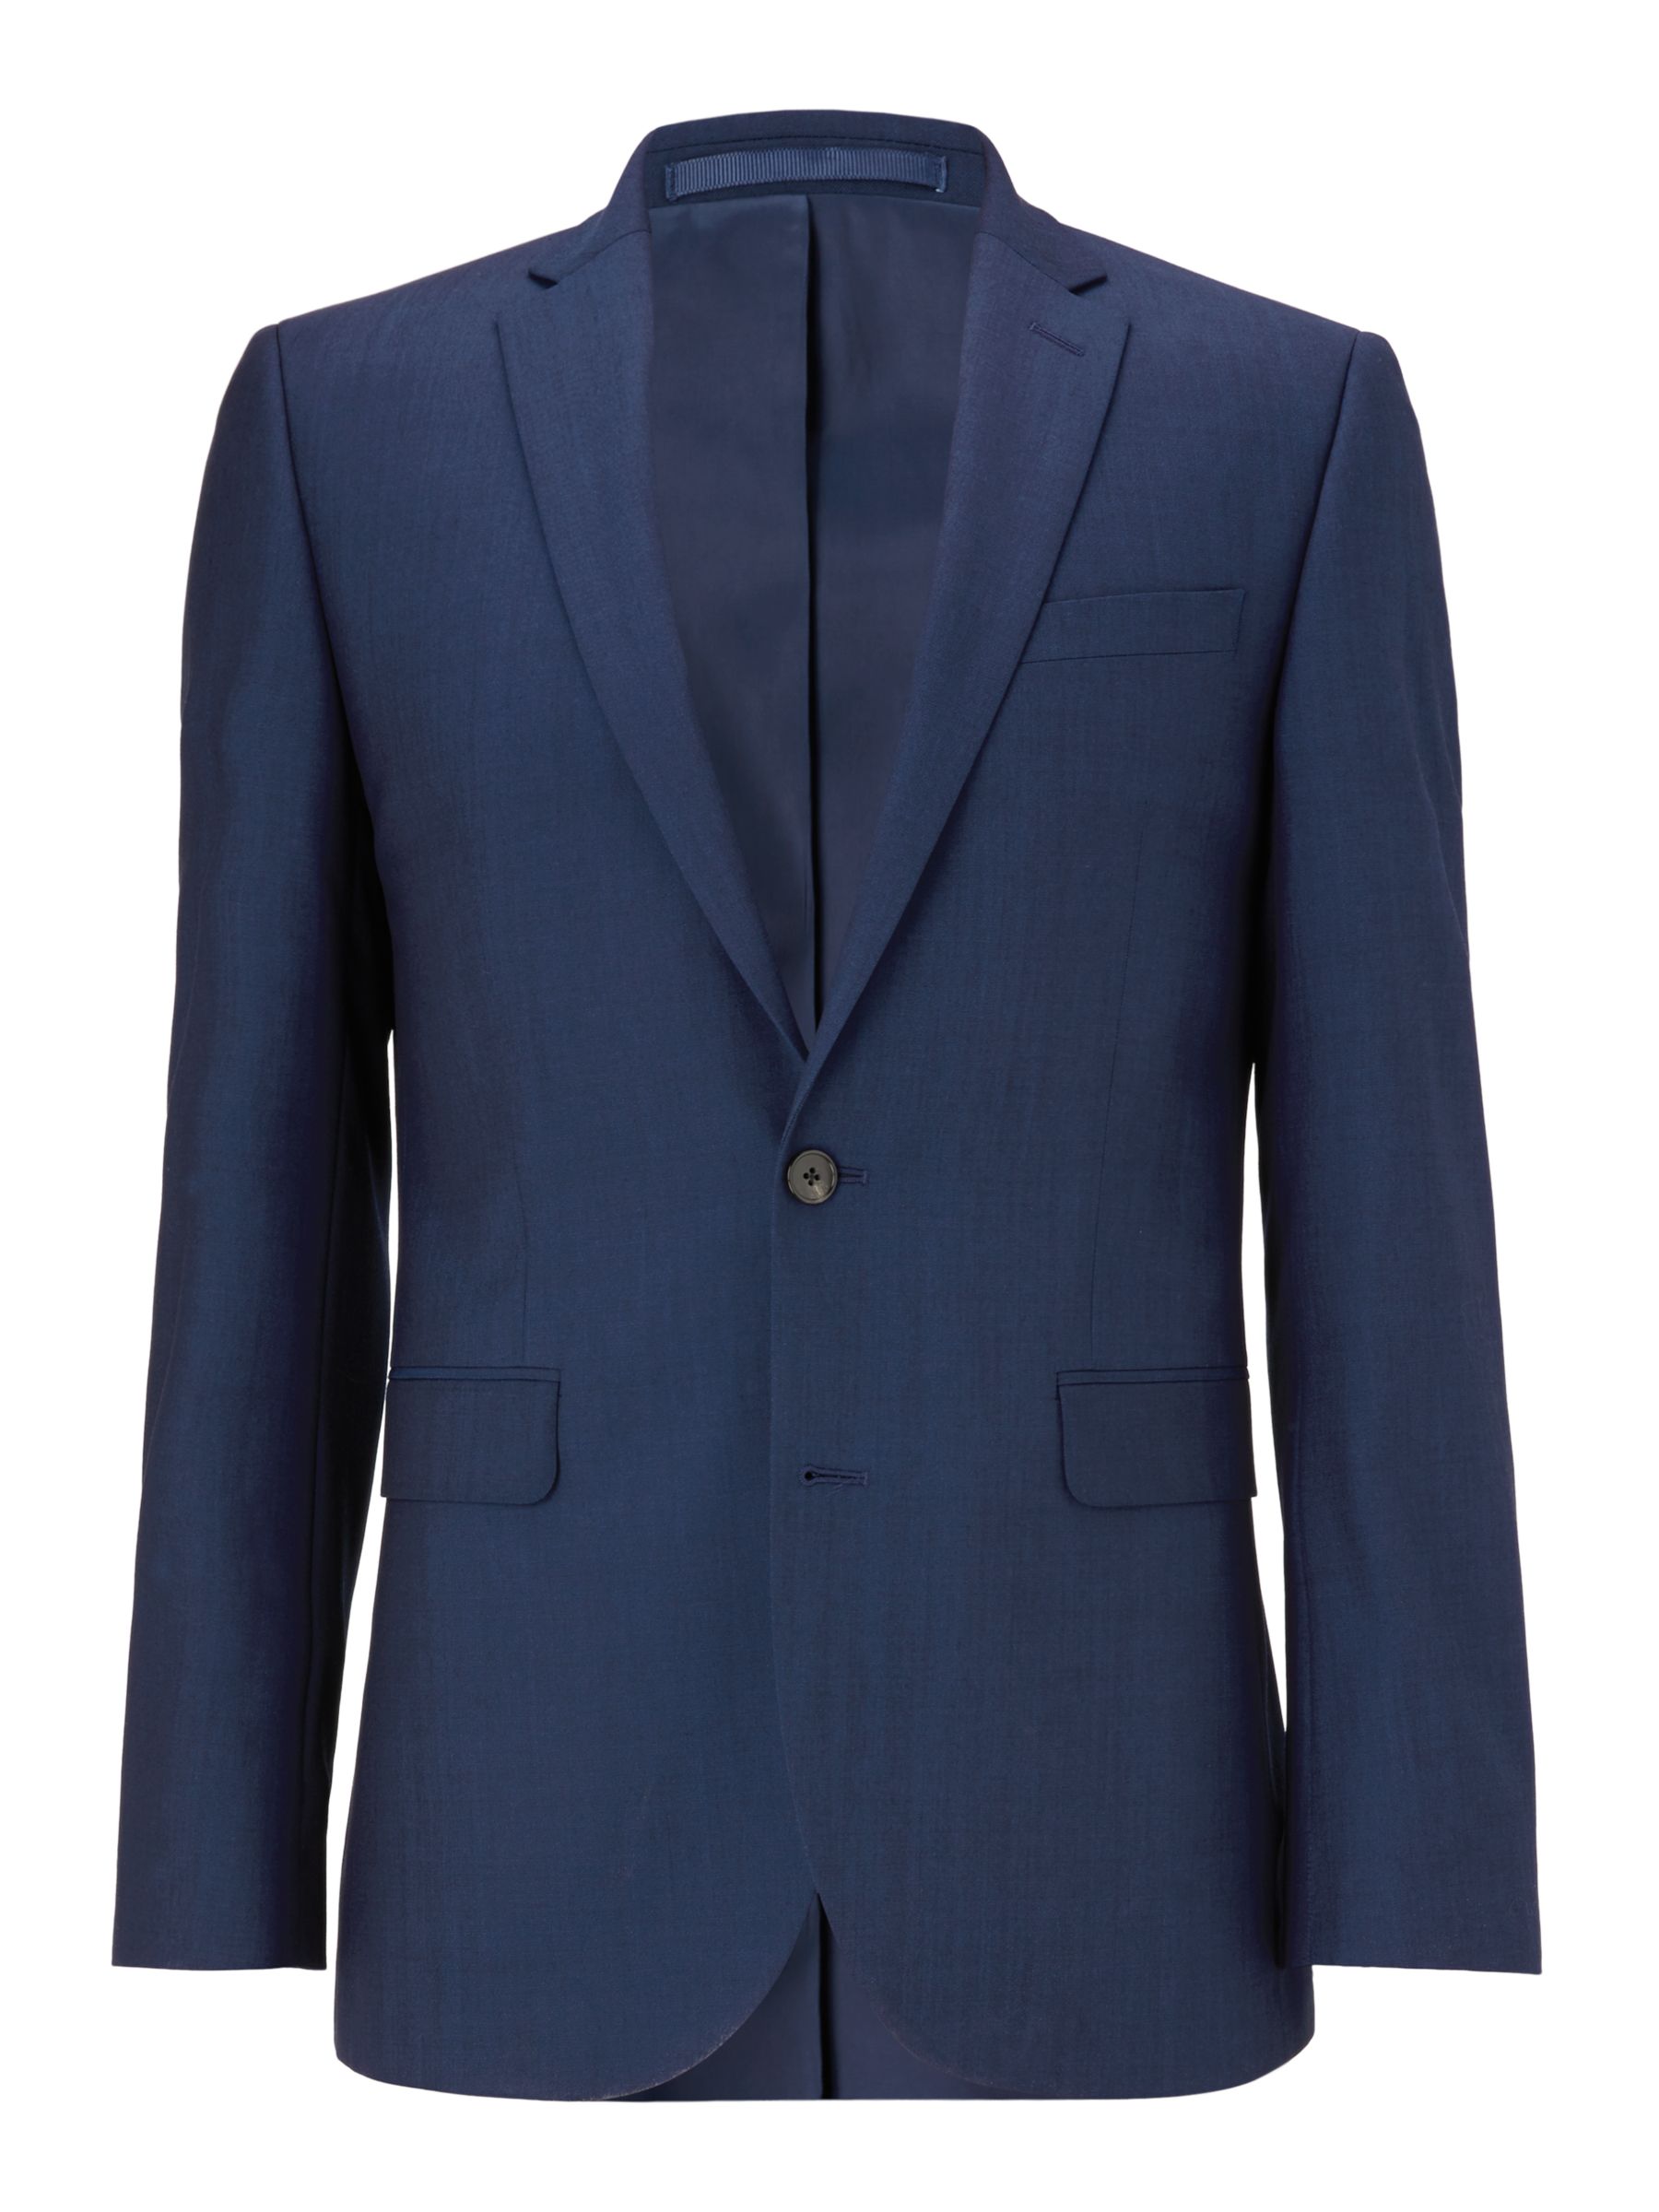 John Lewis & Partners Washable Tailored Suit Jacket, Navy at John Lewis ...